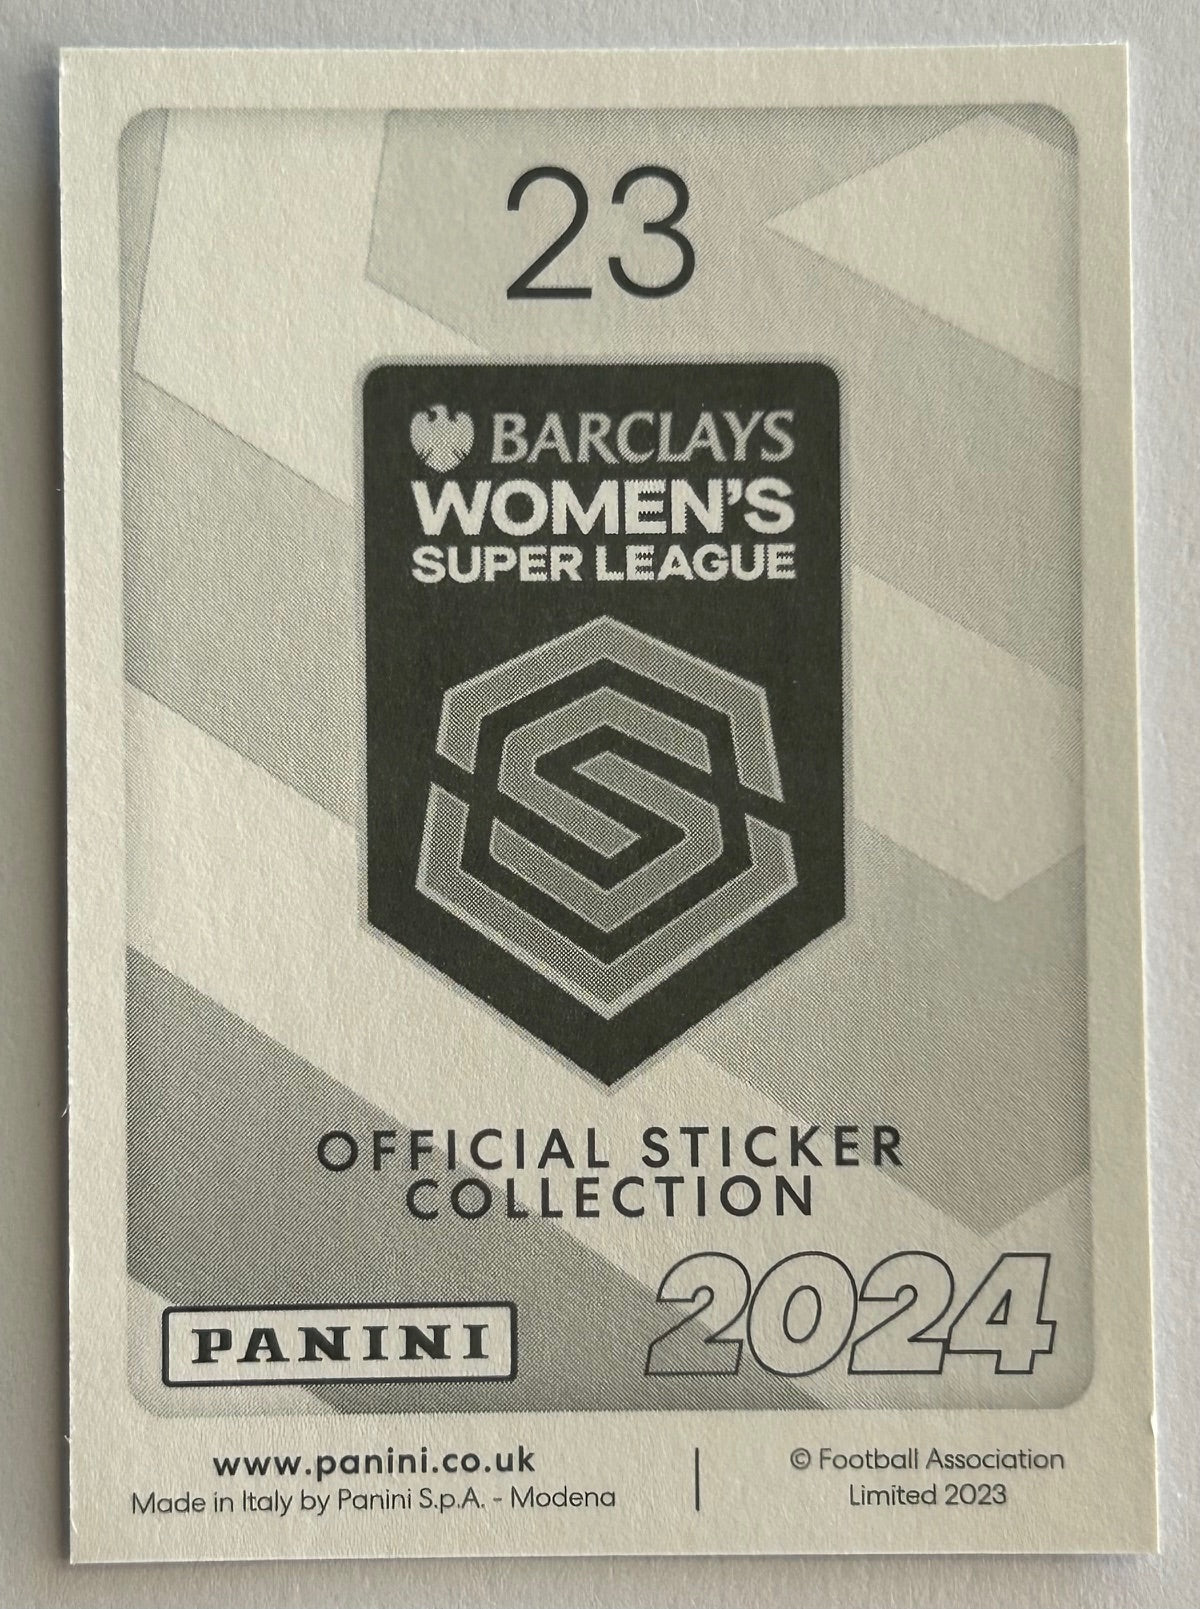 Panini Barclays Women's Super League 2024 - Single SQUAD SNAPSHOT (BRIGHTON & BRISTOL CITY) Stickers (#20 - #25)